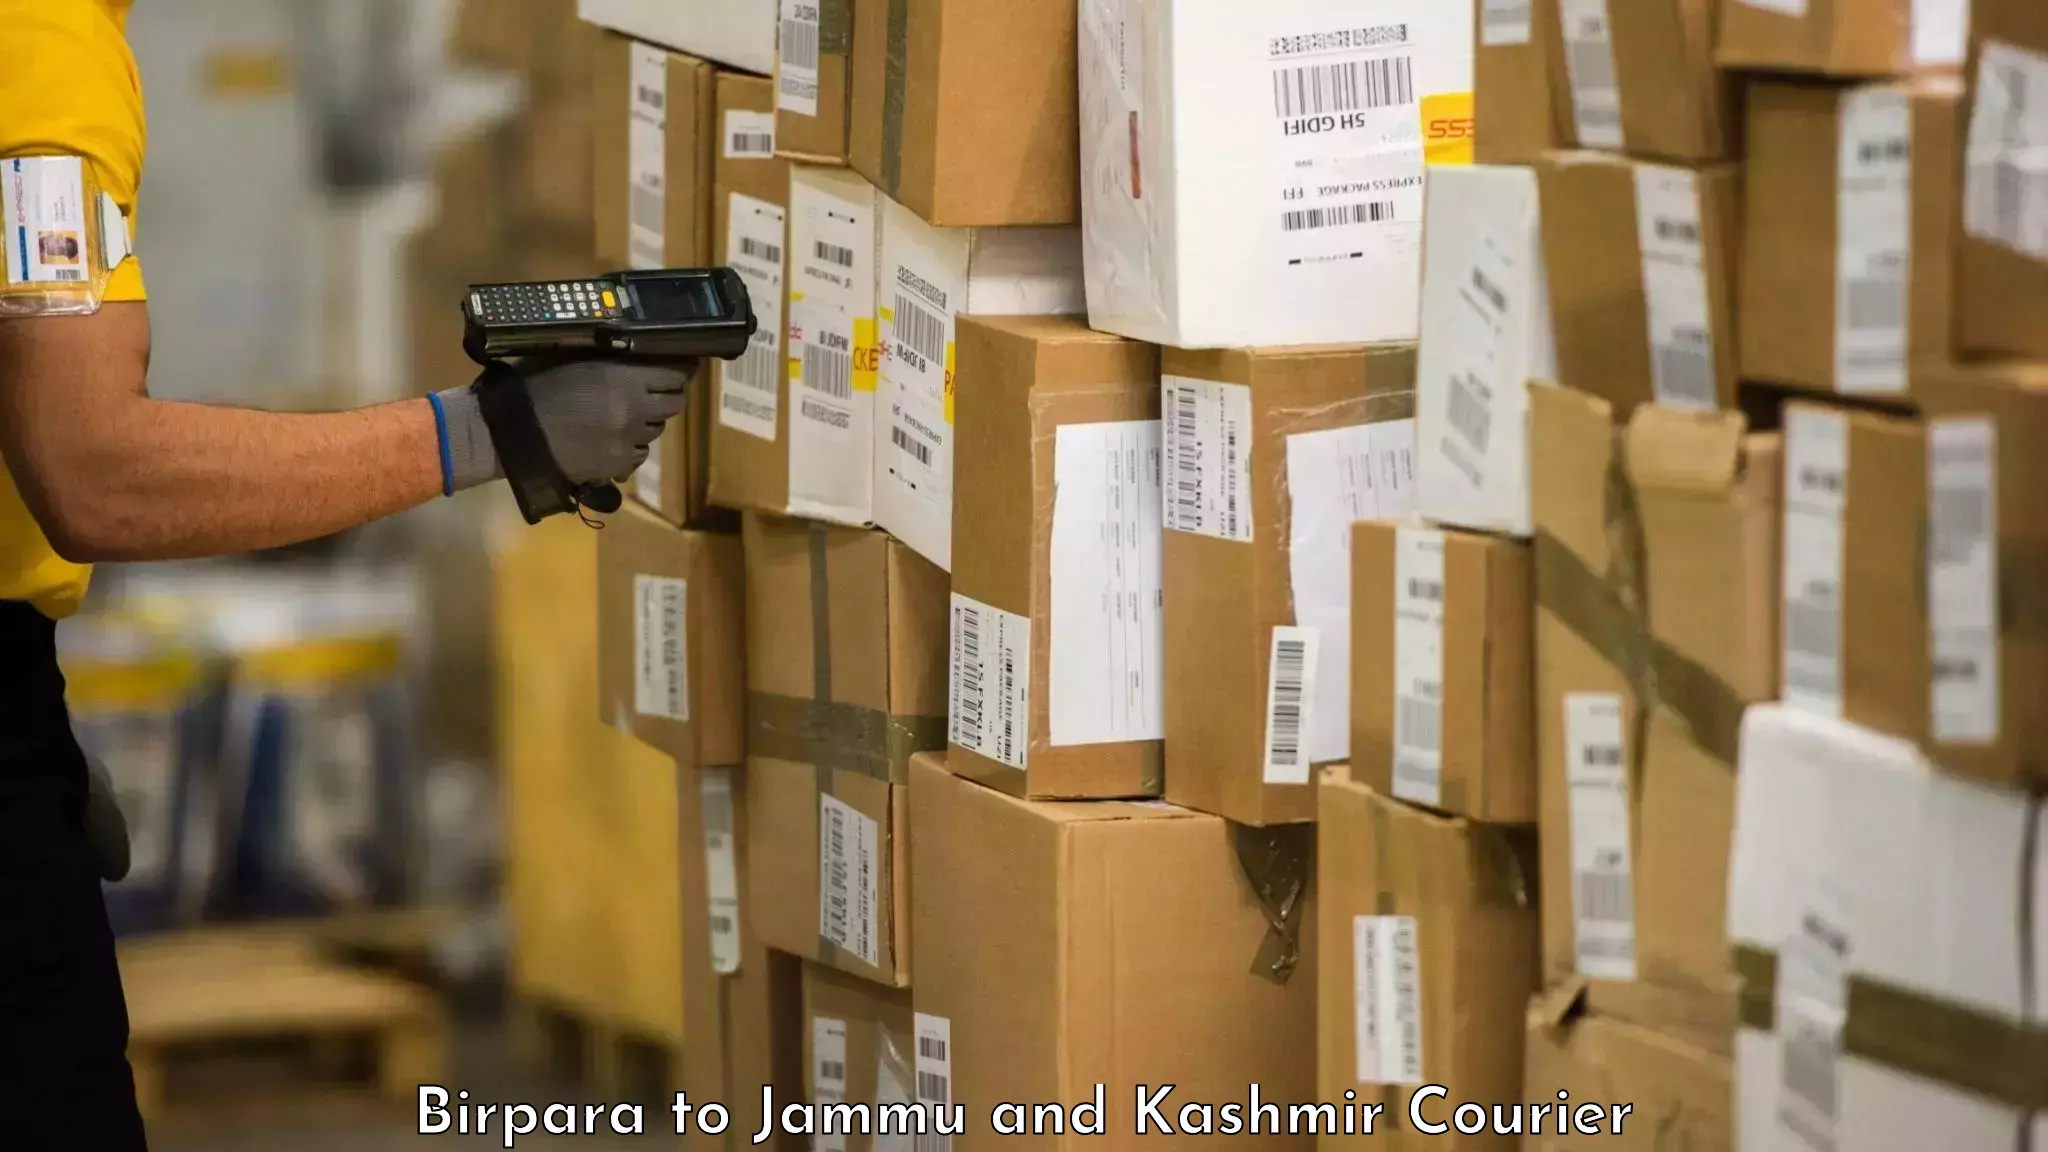 Baggage shipping experts Birpara to Jammu and Kashmir